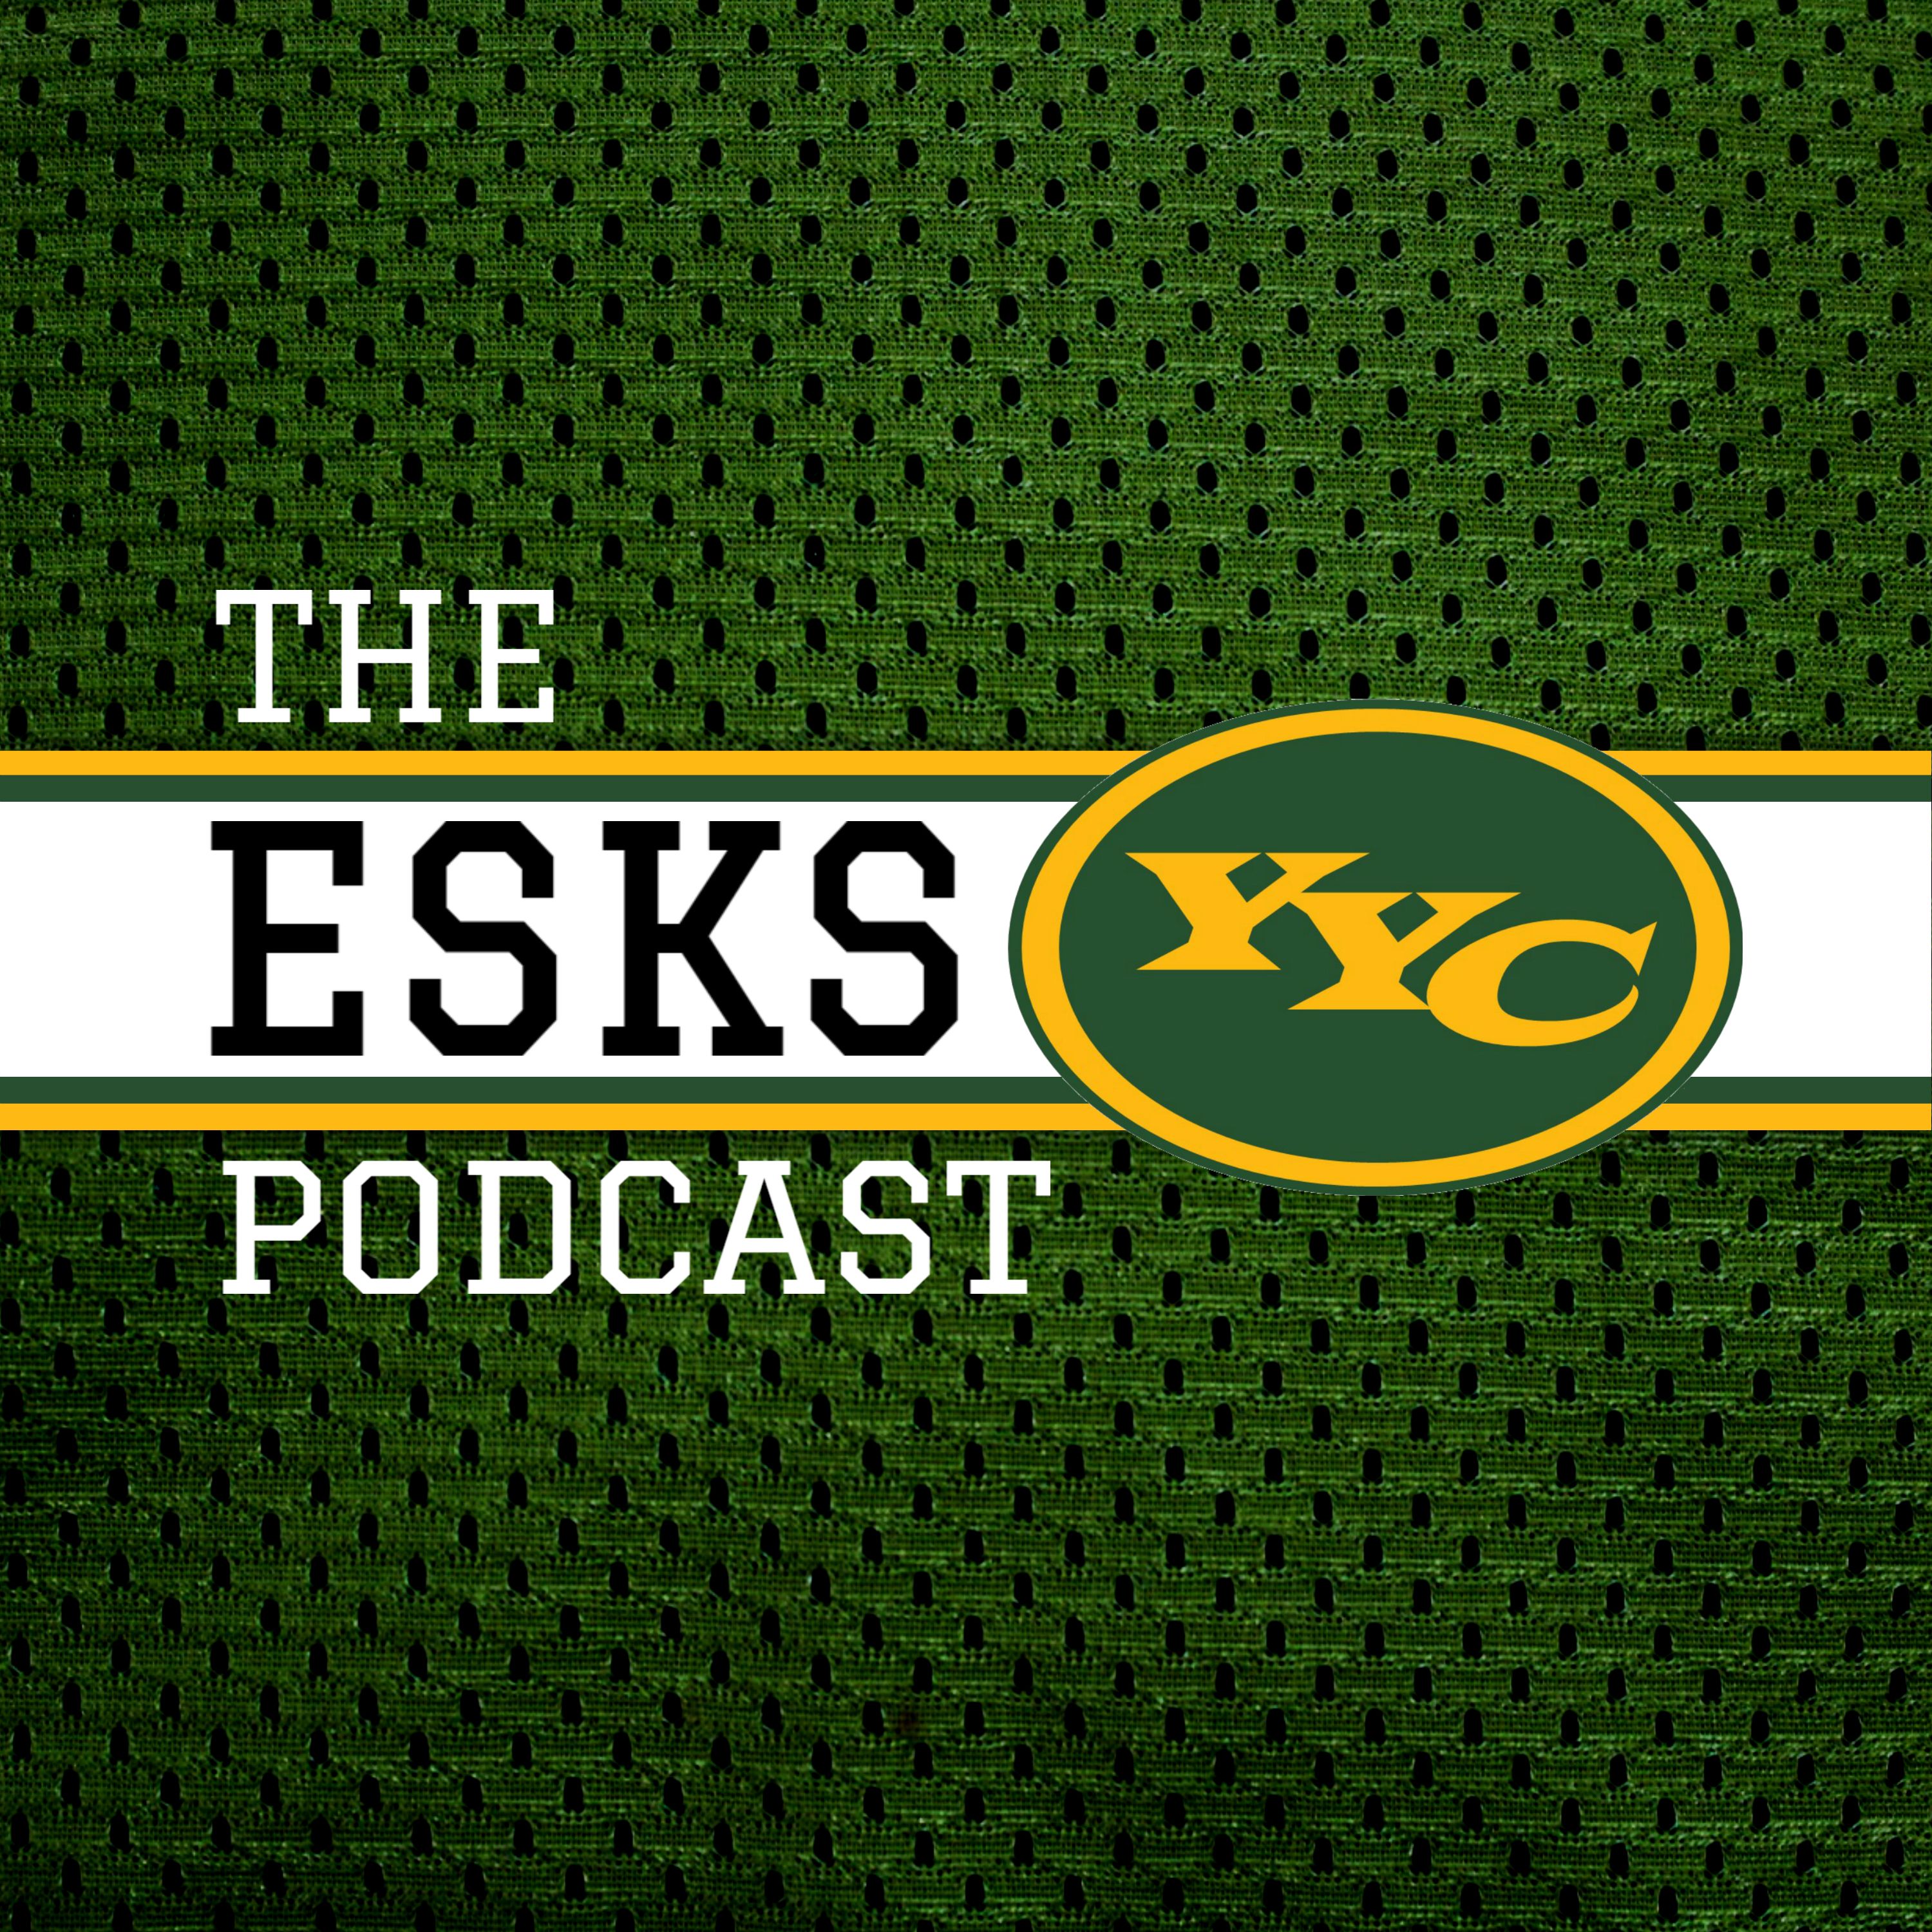 The EsksYYC Podcast